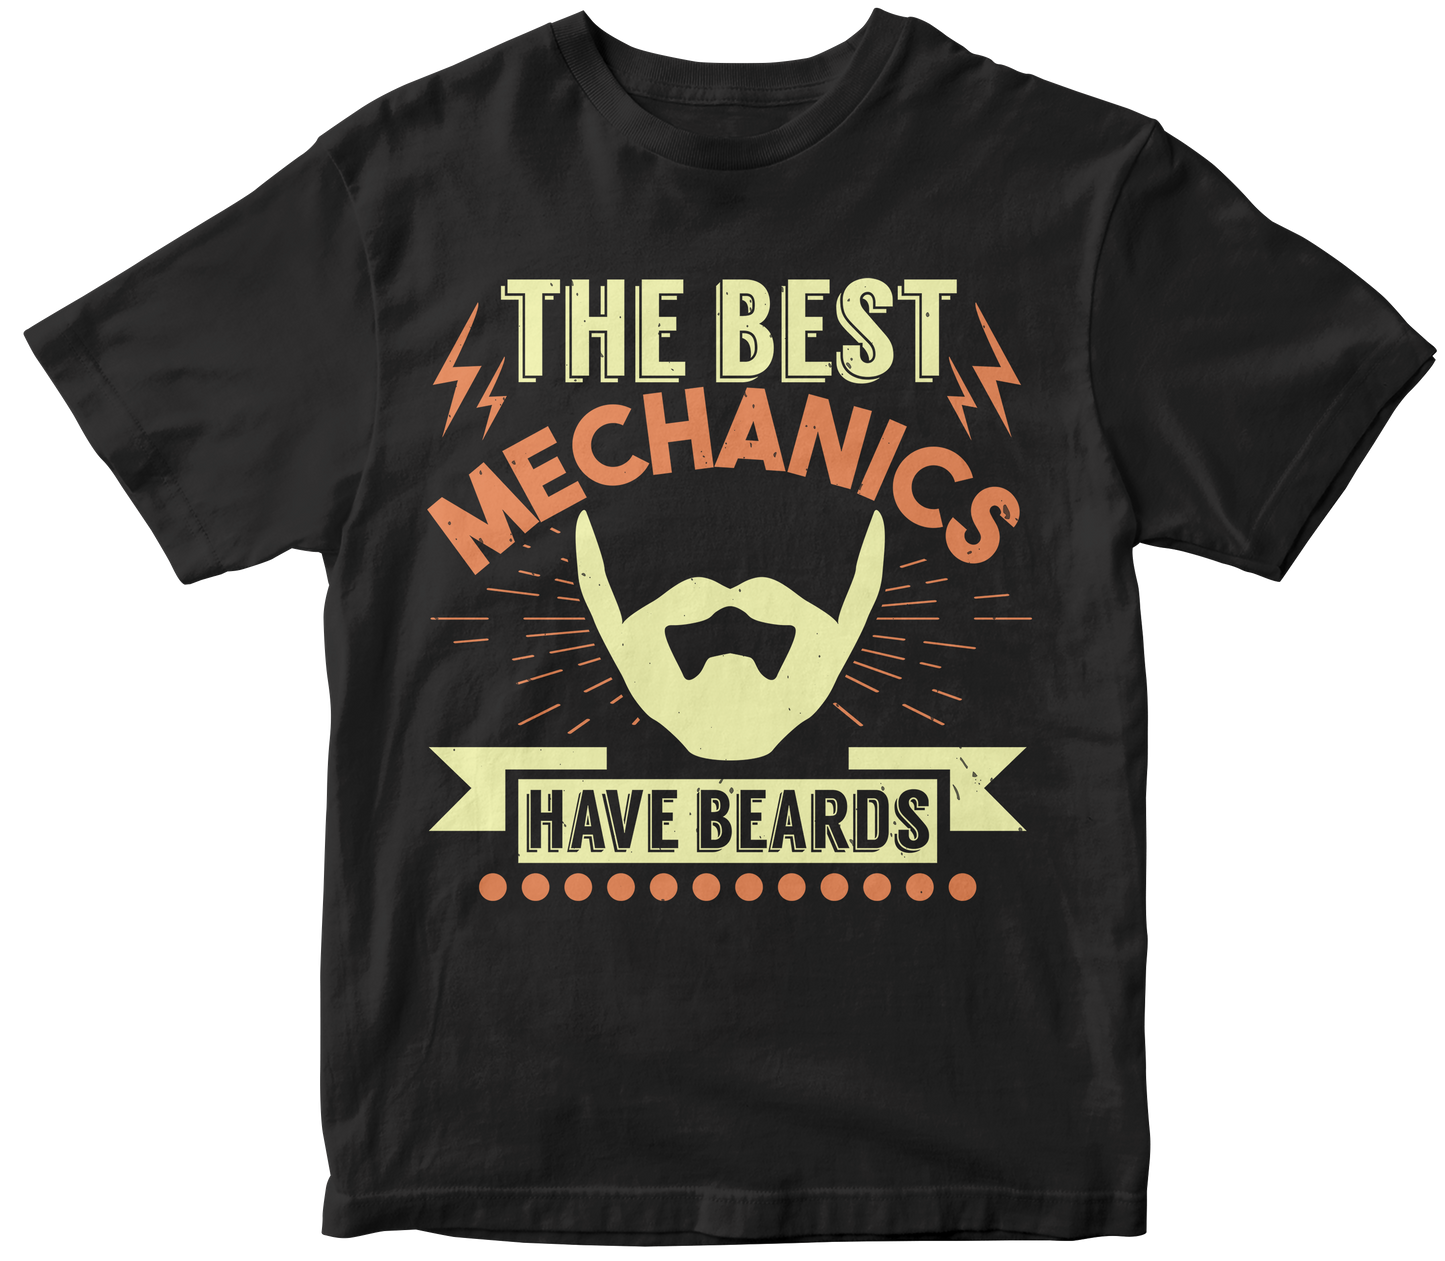 The best mechanics have beards